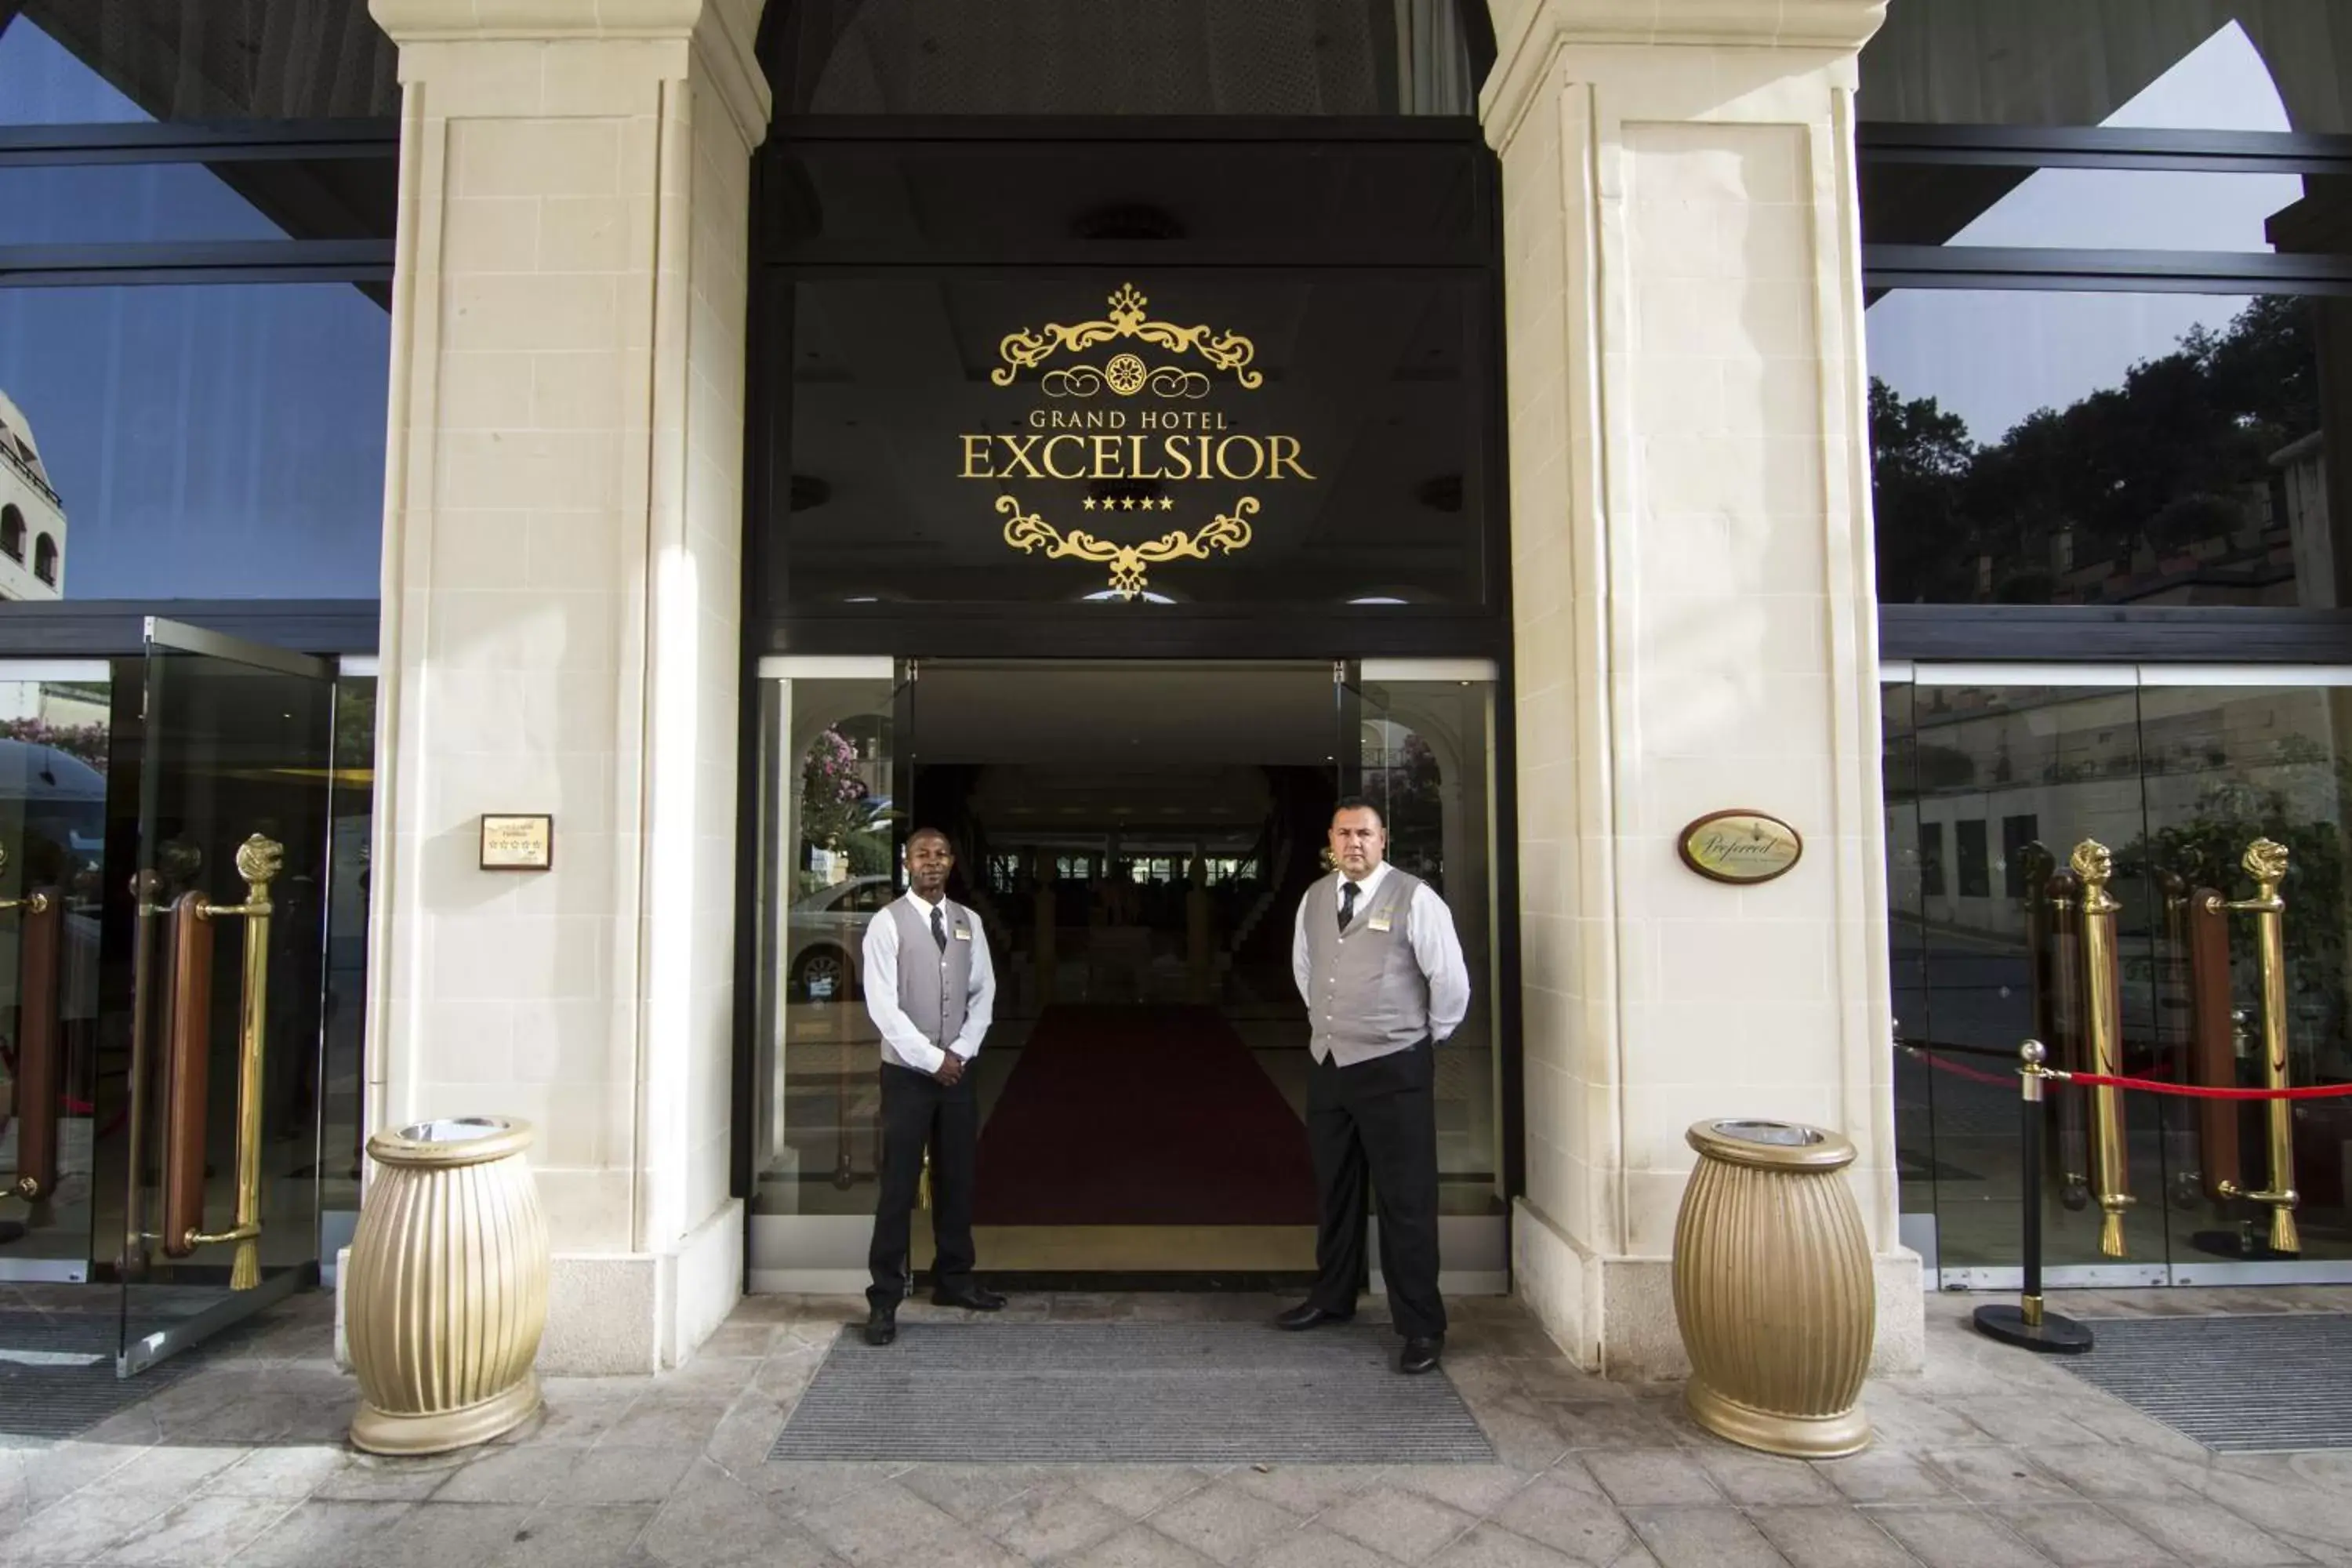 Facade/entrance in Grand Hotel Excelsior